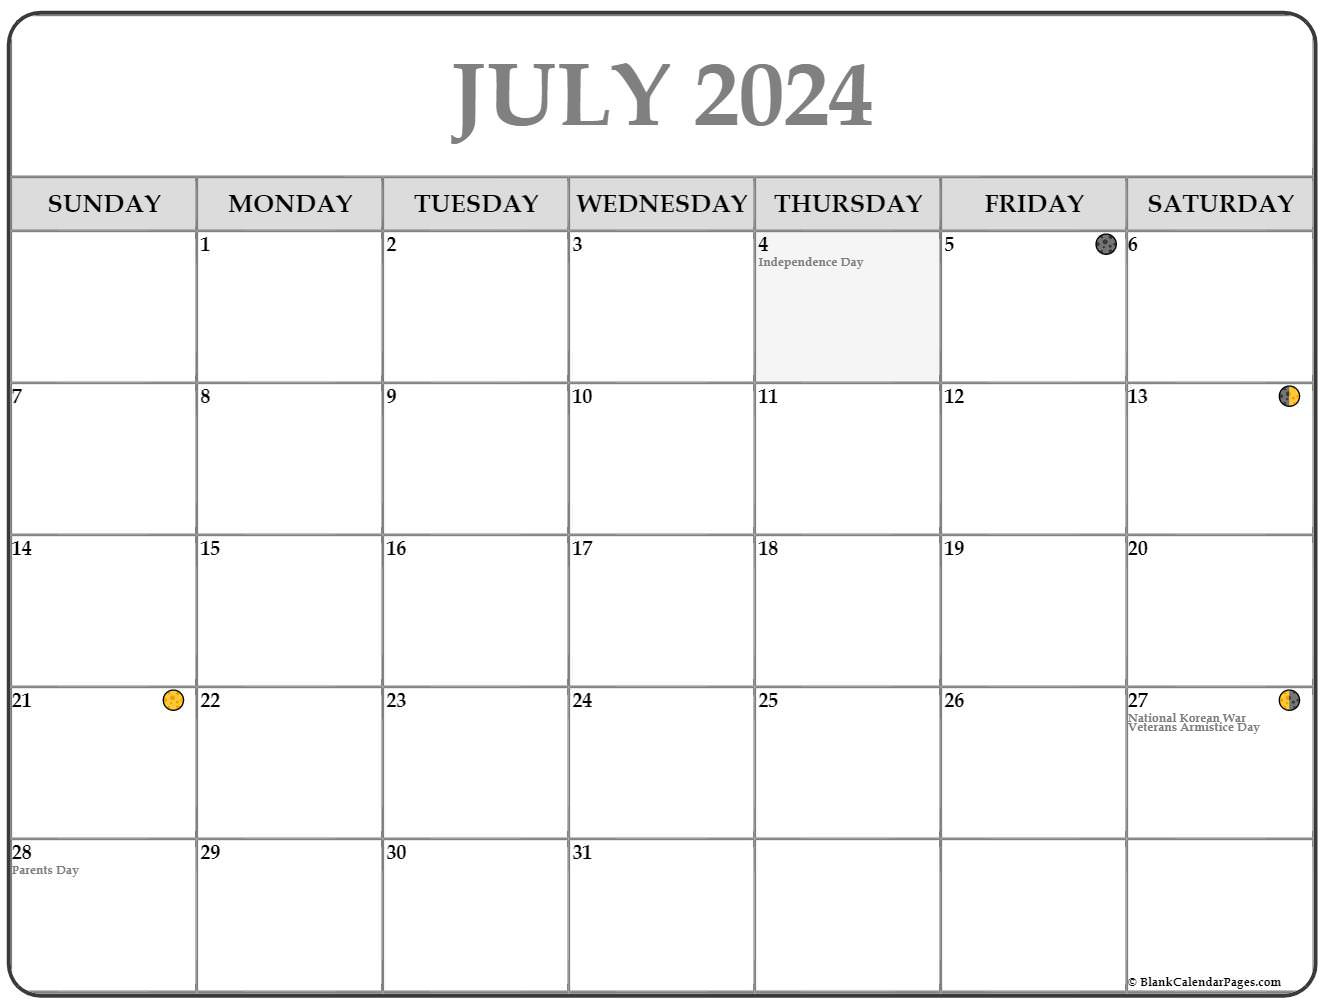 July 2024 Lunar Calendar | Moon Phase Calendar in July 2024 Calendar With Moon Phases